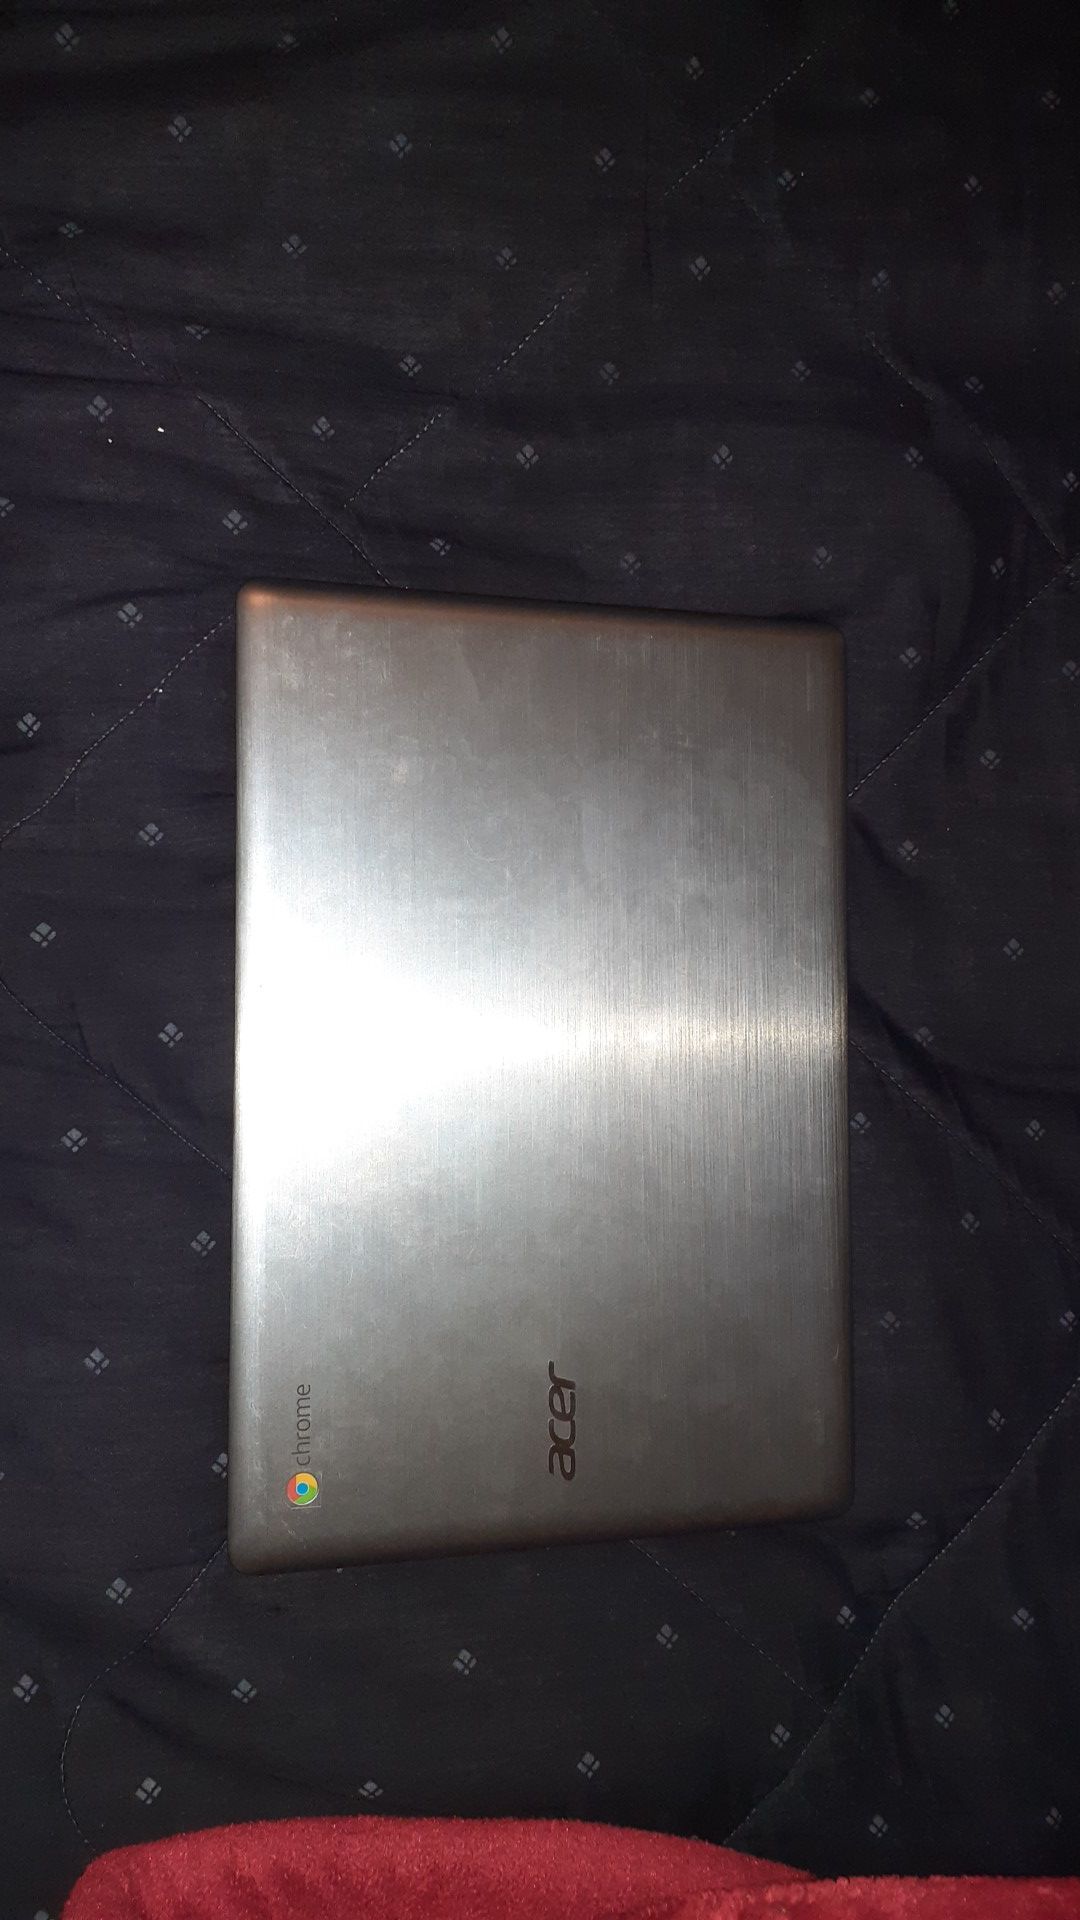 Acer chromebook 14